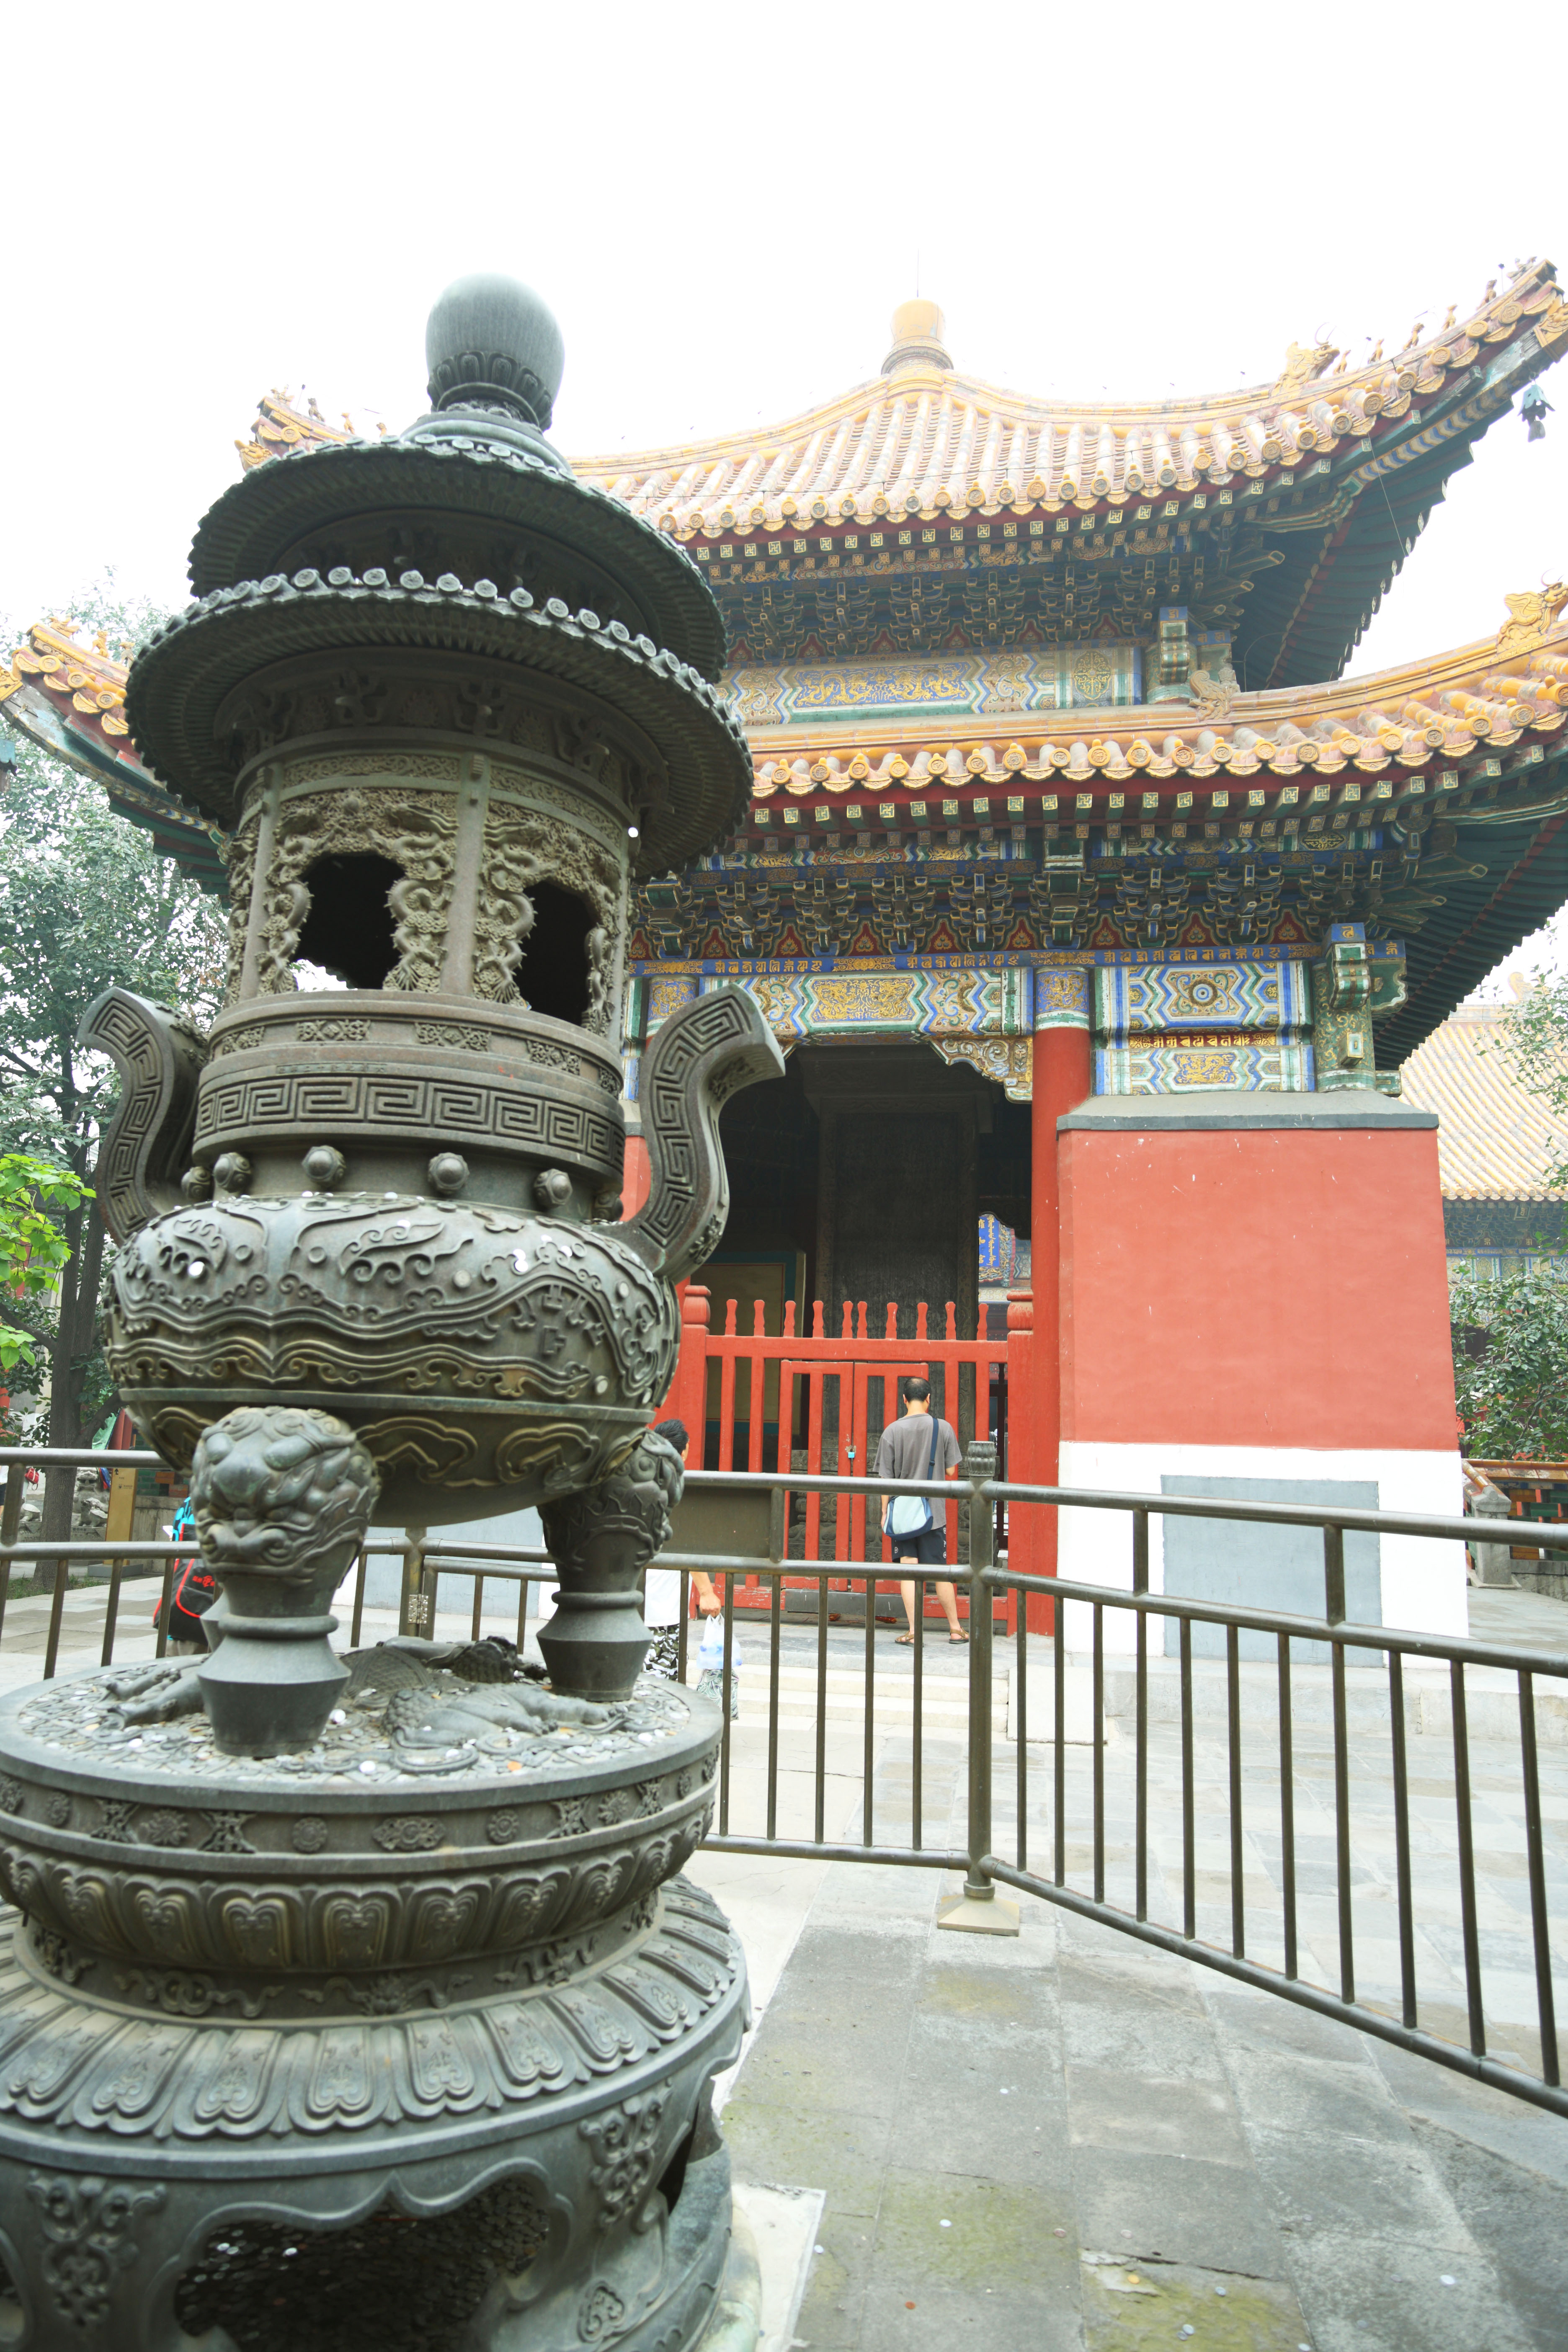 fotografia, material, livra, ajardine, imagine, proveja fotografia,Um Yonghe Templo incenso abajur, escultura, drago, padro, Chaitya